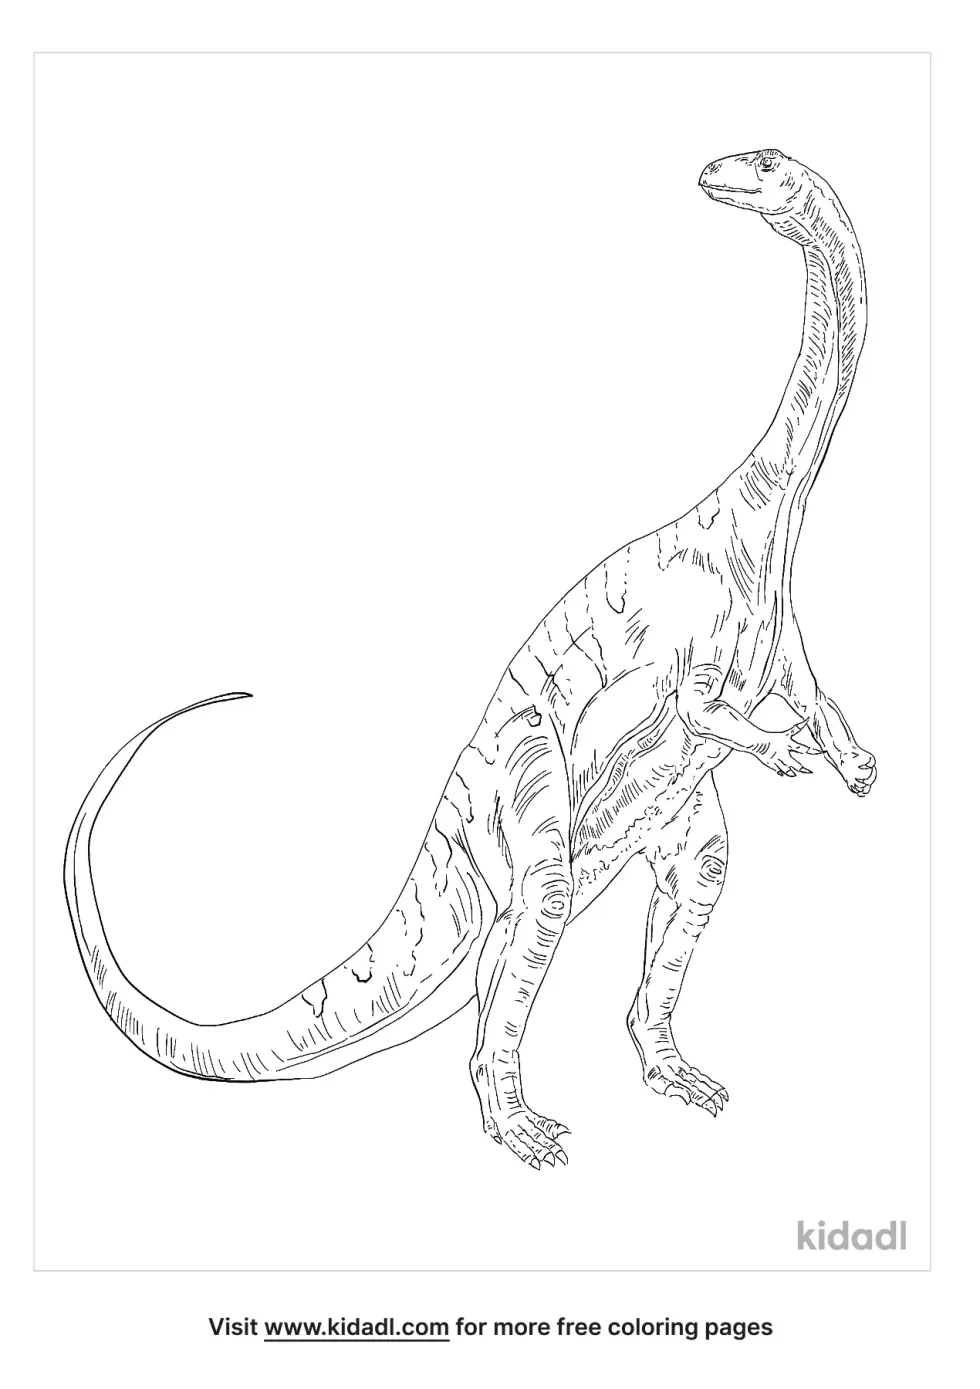 Ammosaurus Coloring Page